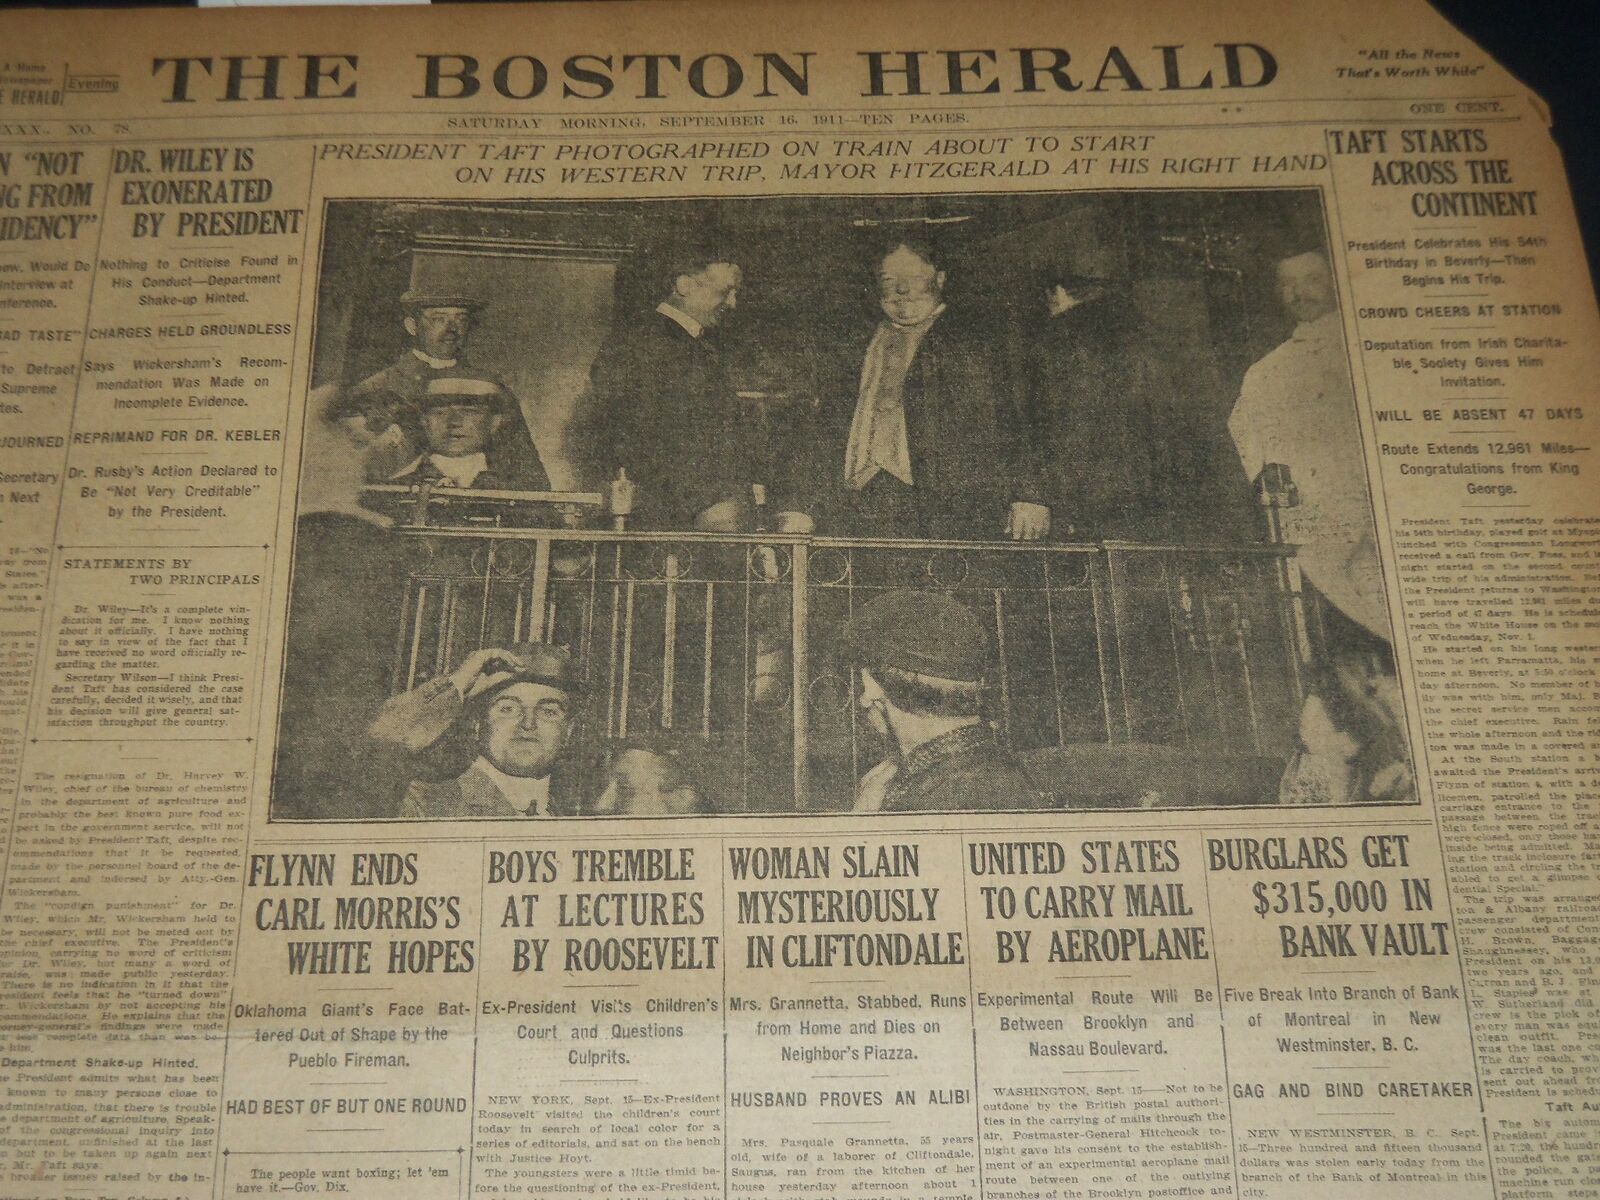 1911 SEPTEMBER 16 THE BOSTON HERALD - TAFT STARTS ACROSS THE CONTINENT - BH 314